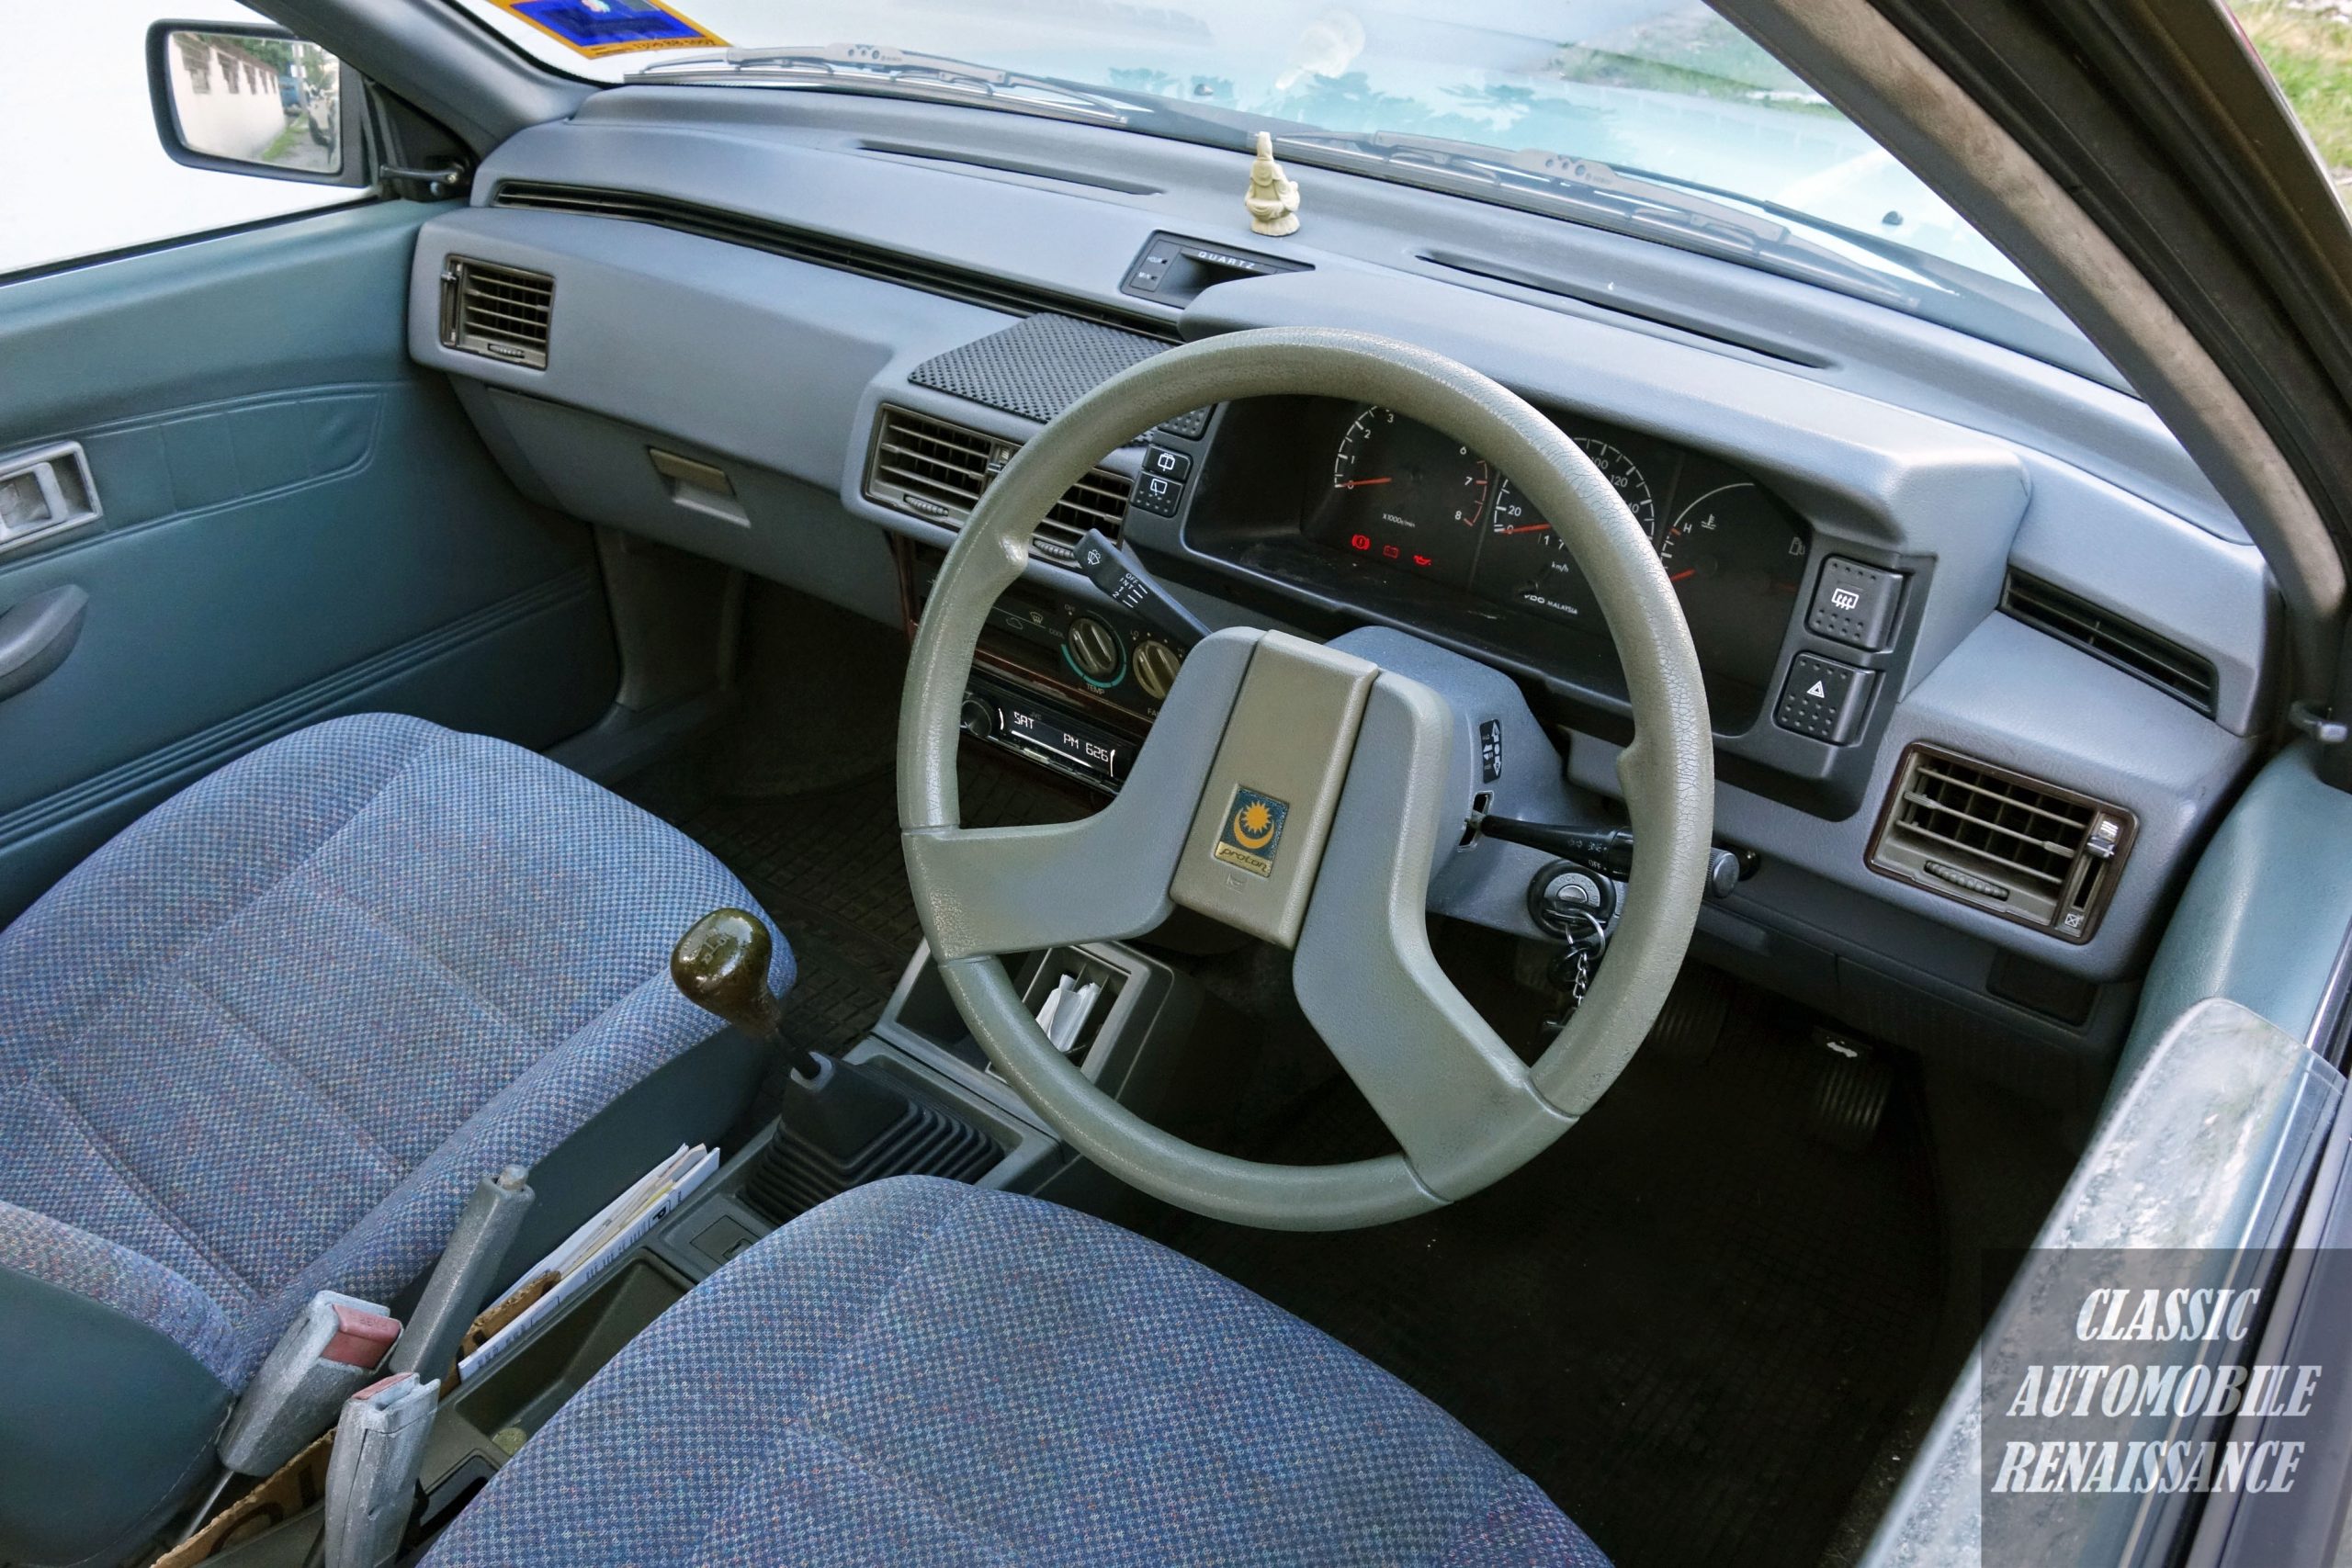 The interior of Ken's Proton Saga. Image credit: Classic Automobile Renaissance